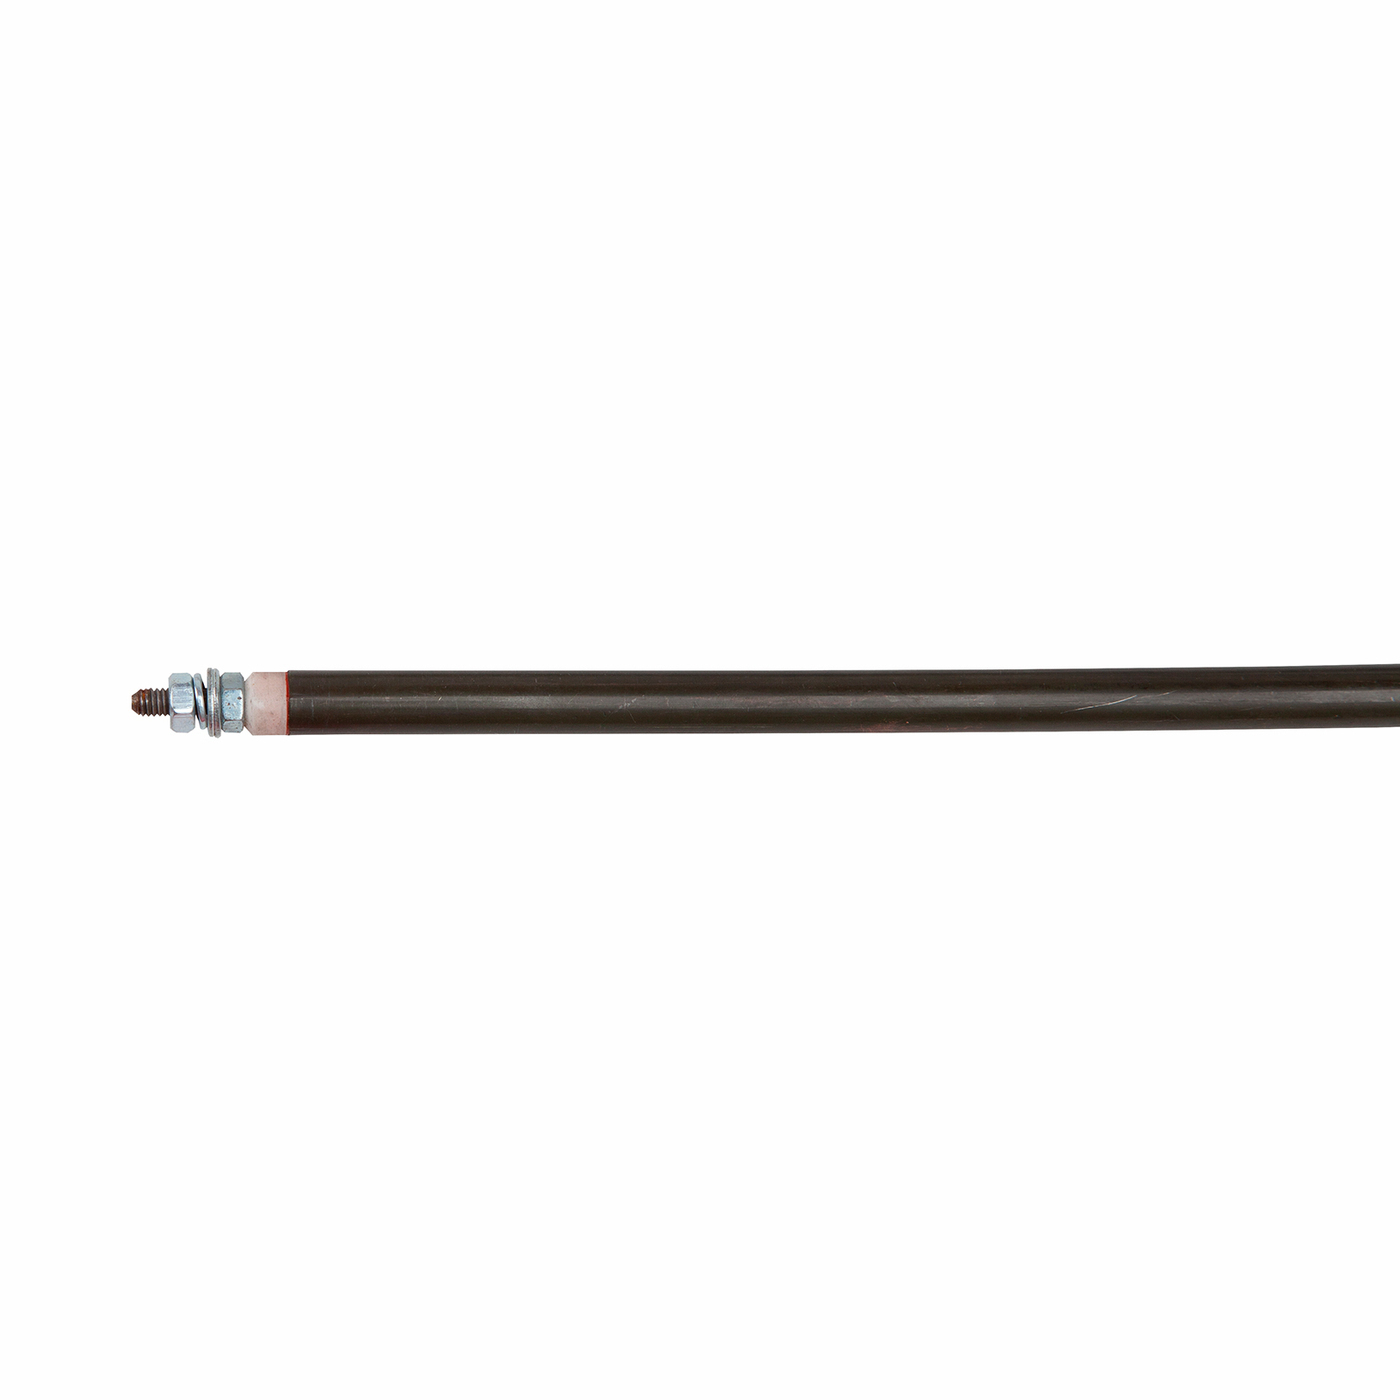 Technix комплект для сборки теплый плинтус charley электрический коричневый 1 п метр